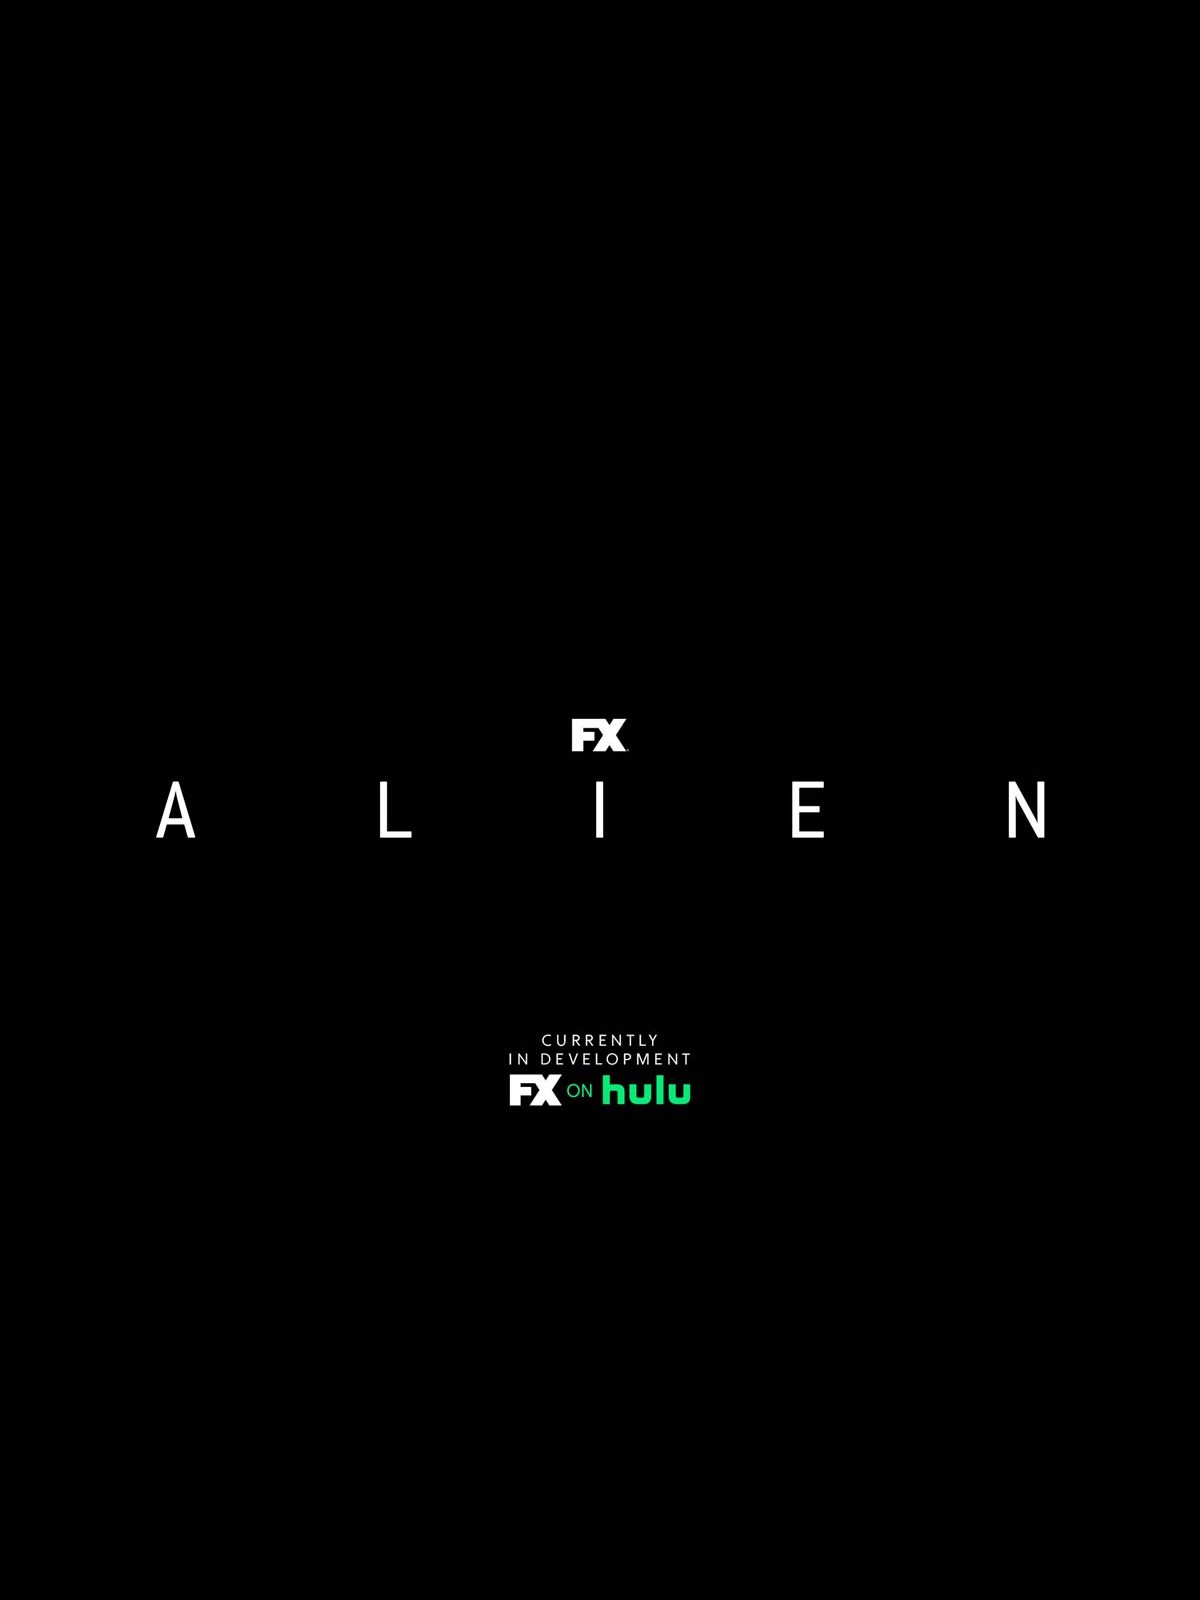 Neuer Alien Film von Fede Alvarez